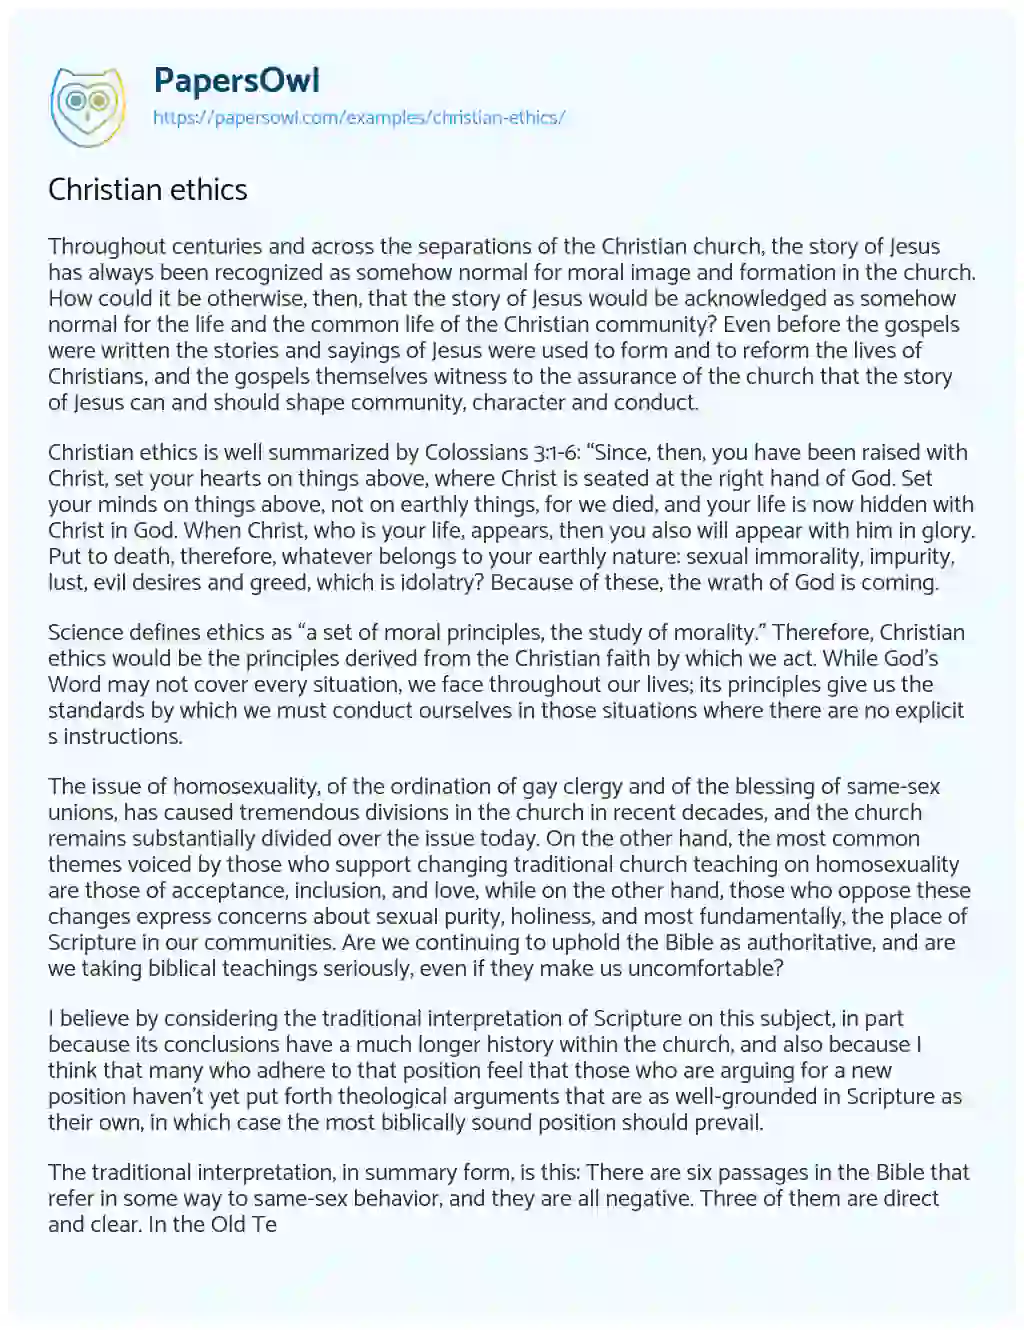 Christian Ethics essay